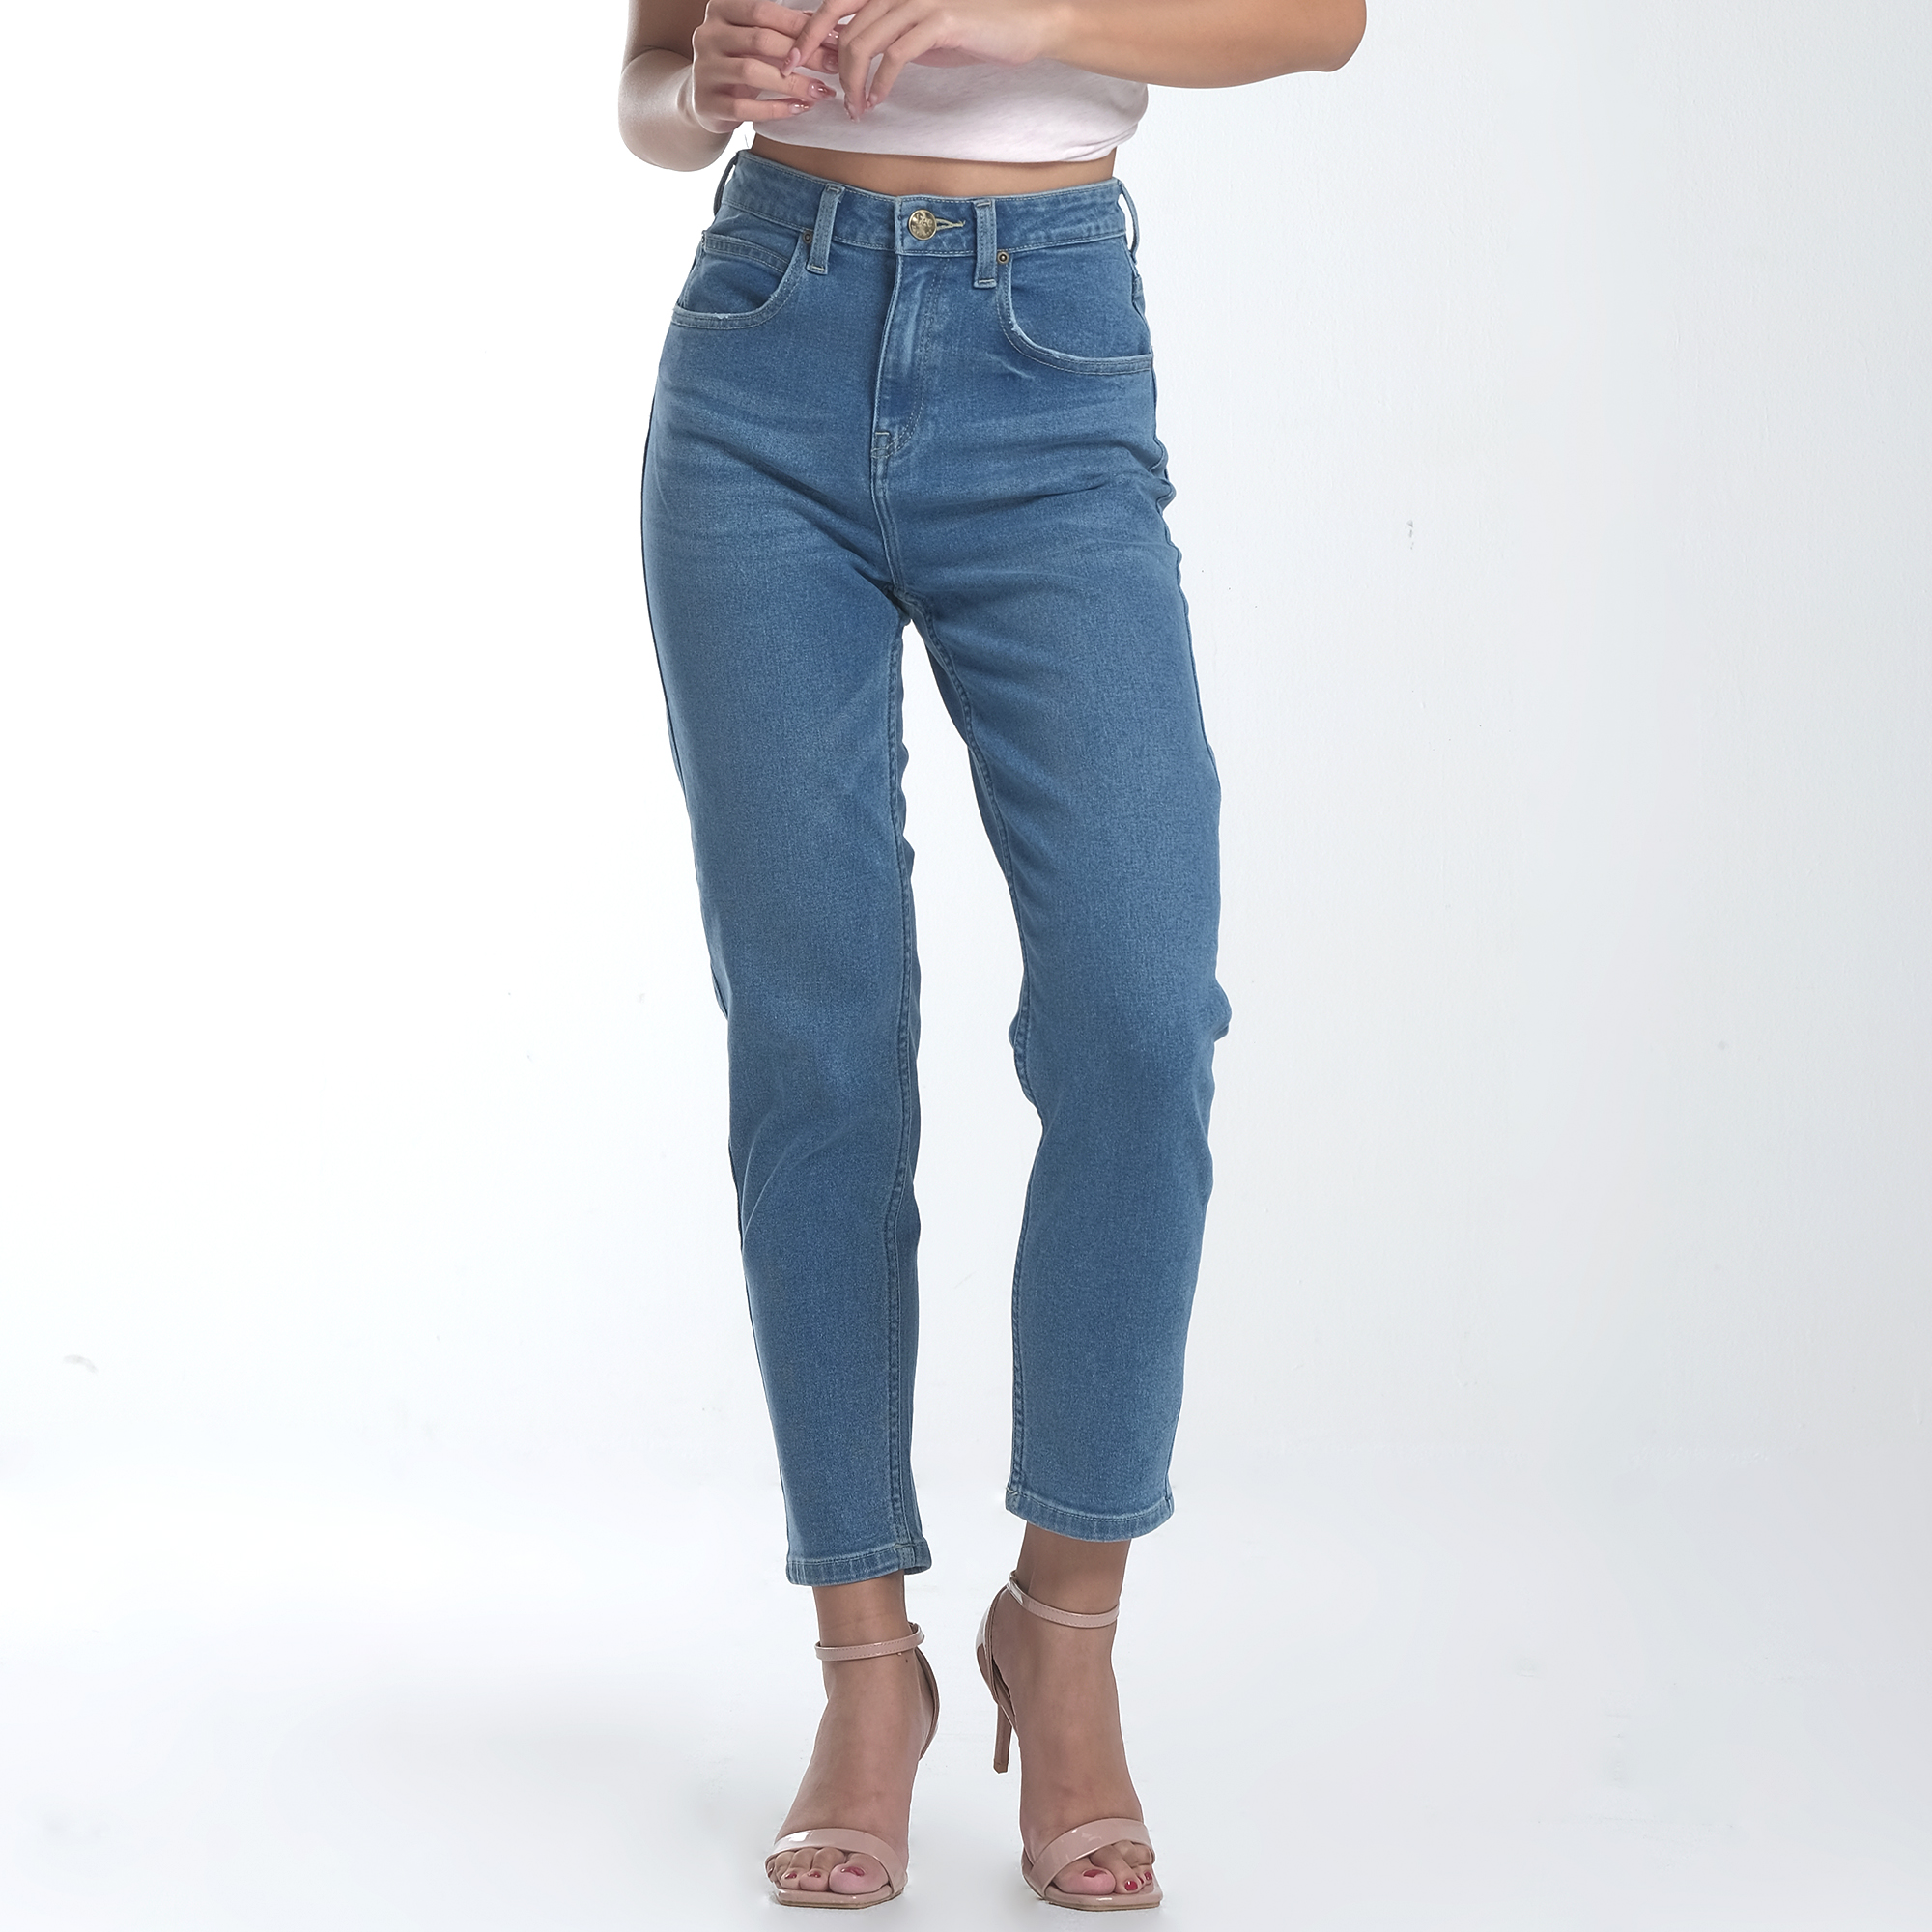 Lee Comfort Boyriend Jeans for Women | Lazada PH